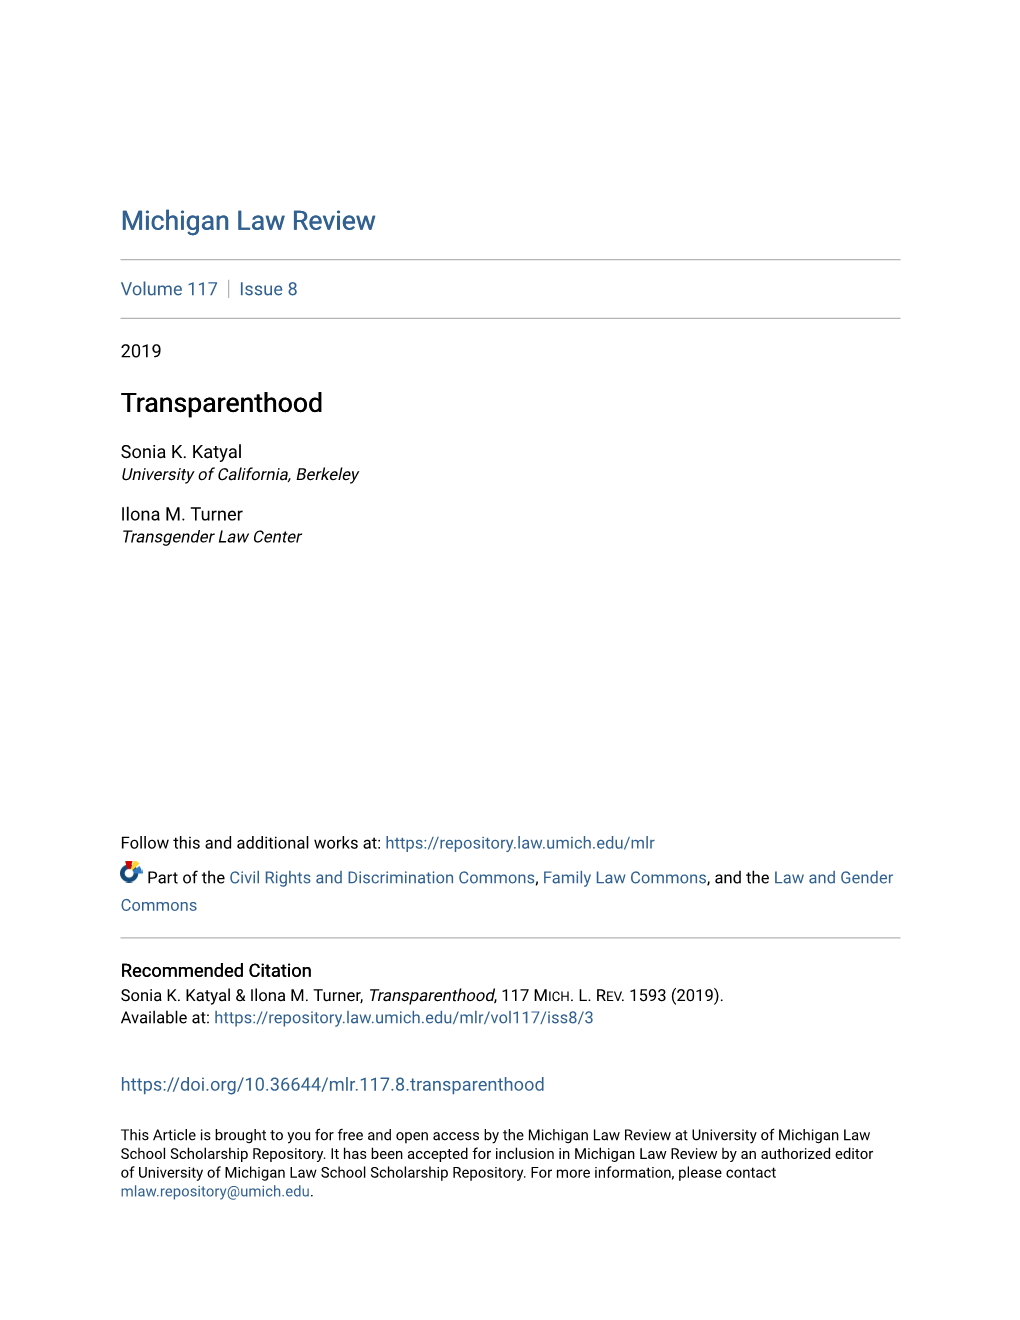 Michigan Law Review Transparenthood